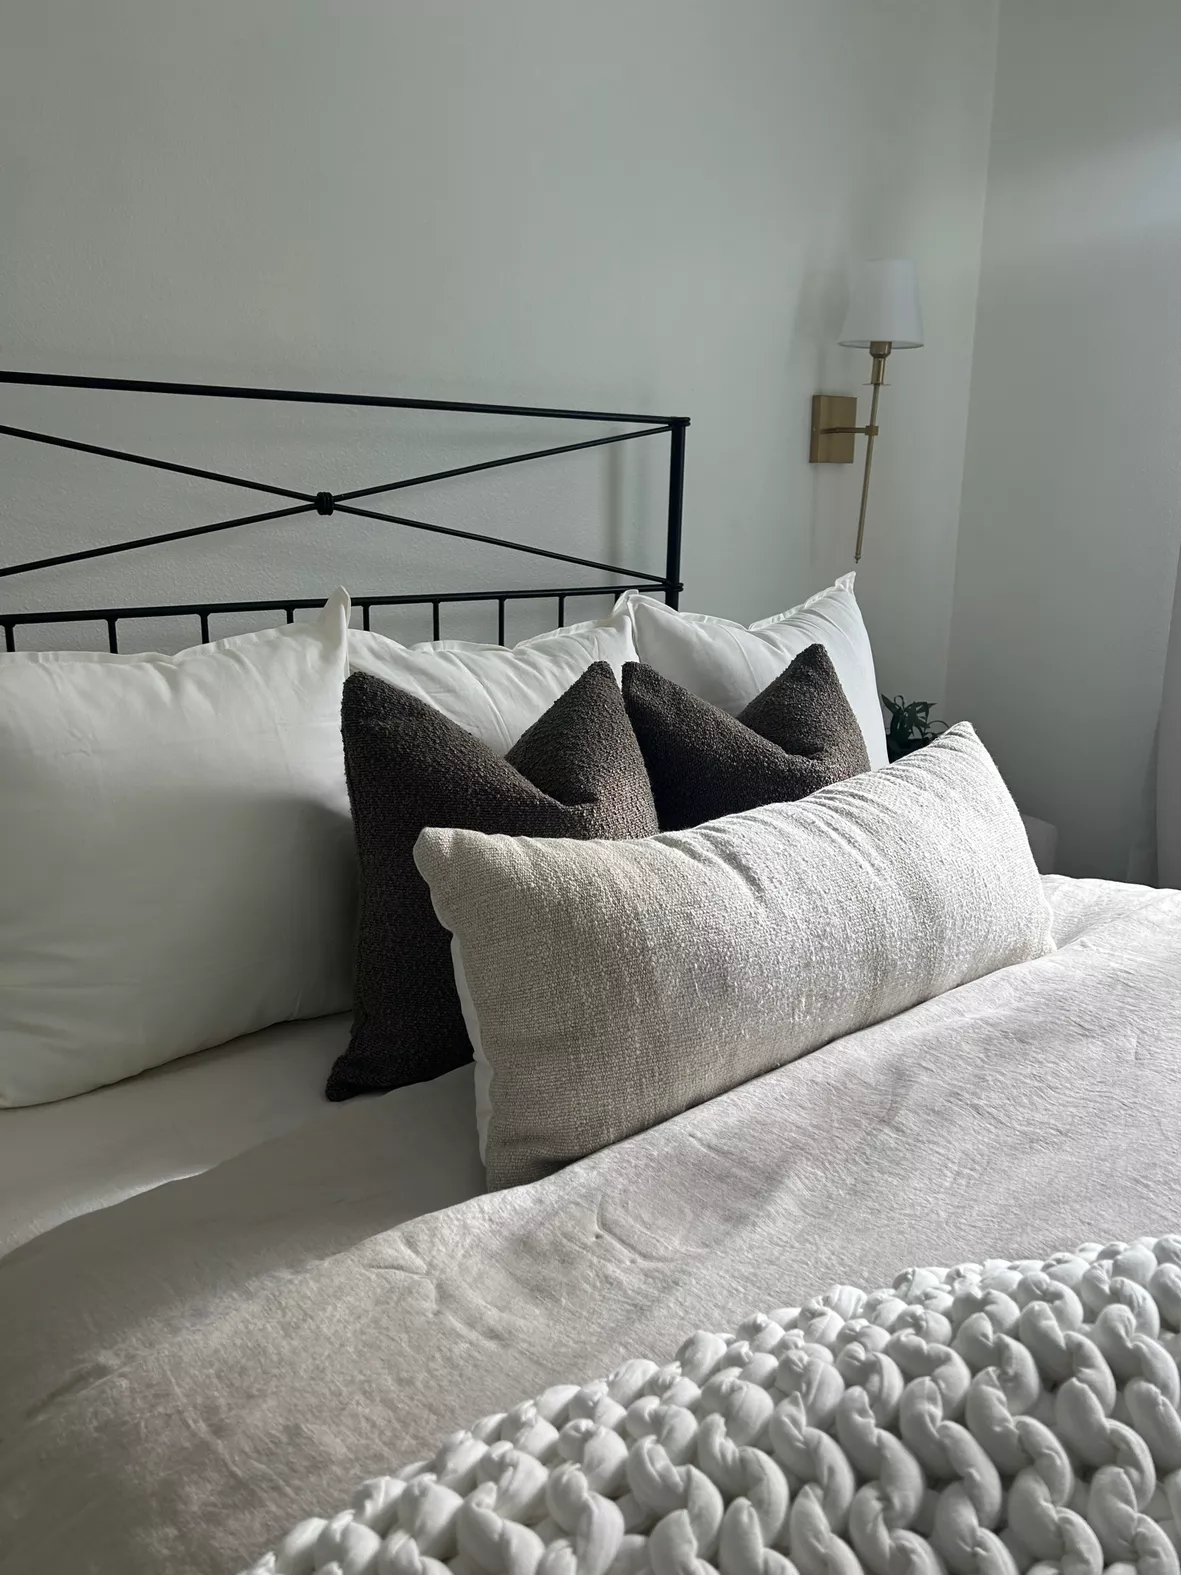 OTOSTAR 20x20 Inch Throw Pillow Inserts Set of 4 Premium Bedding